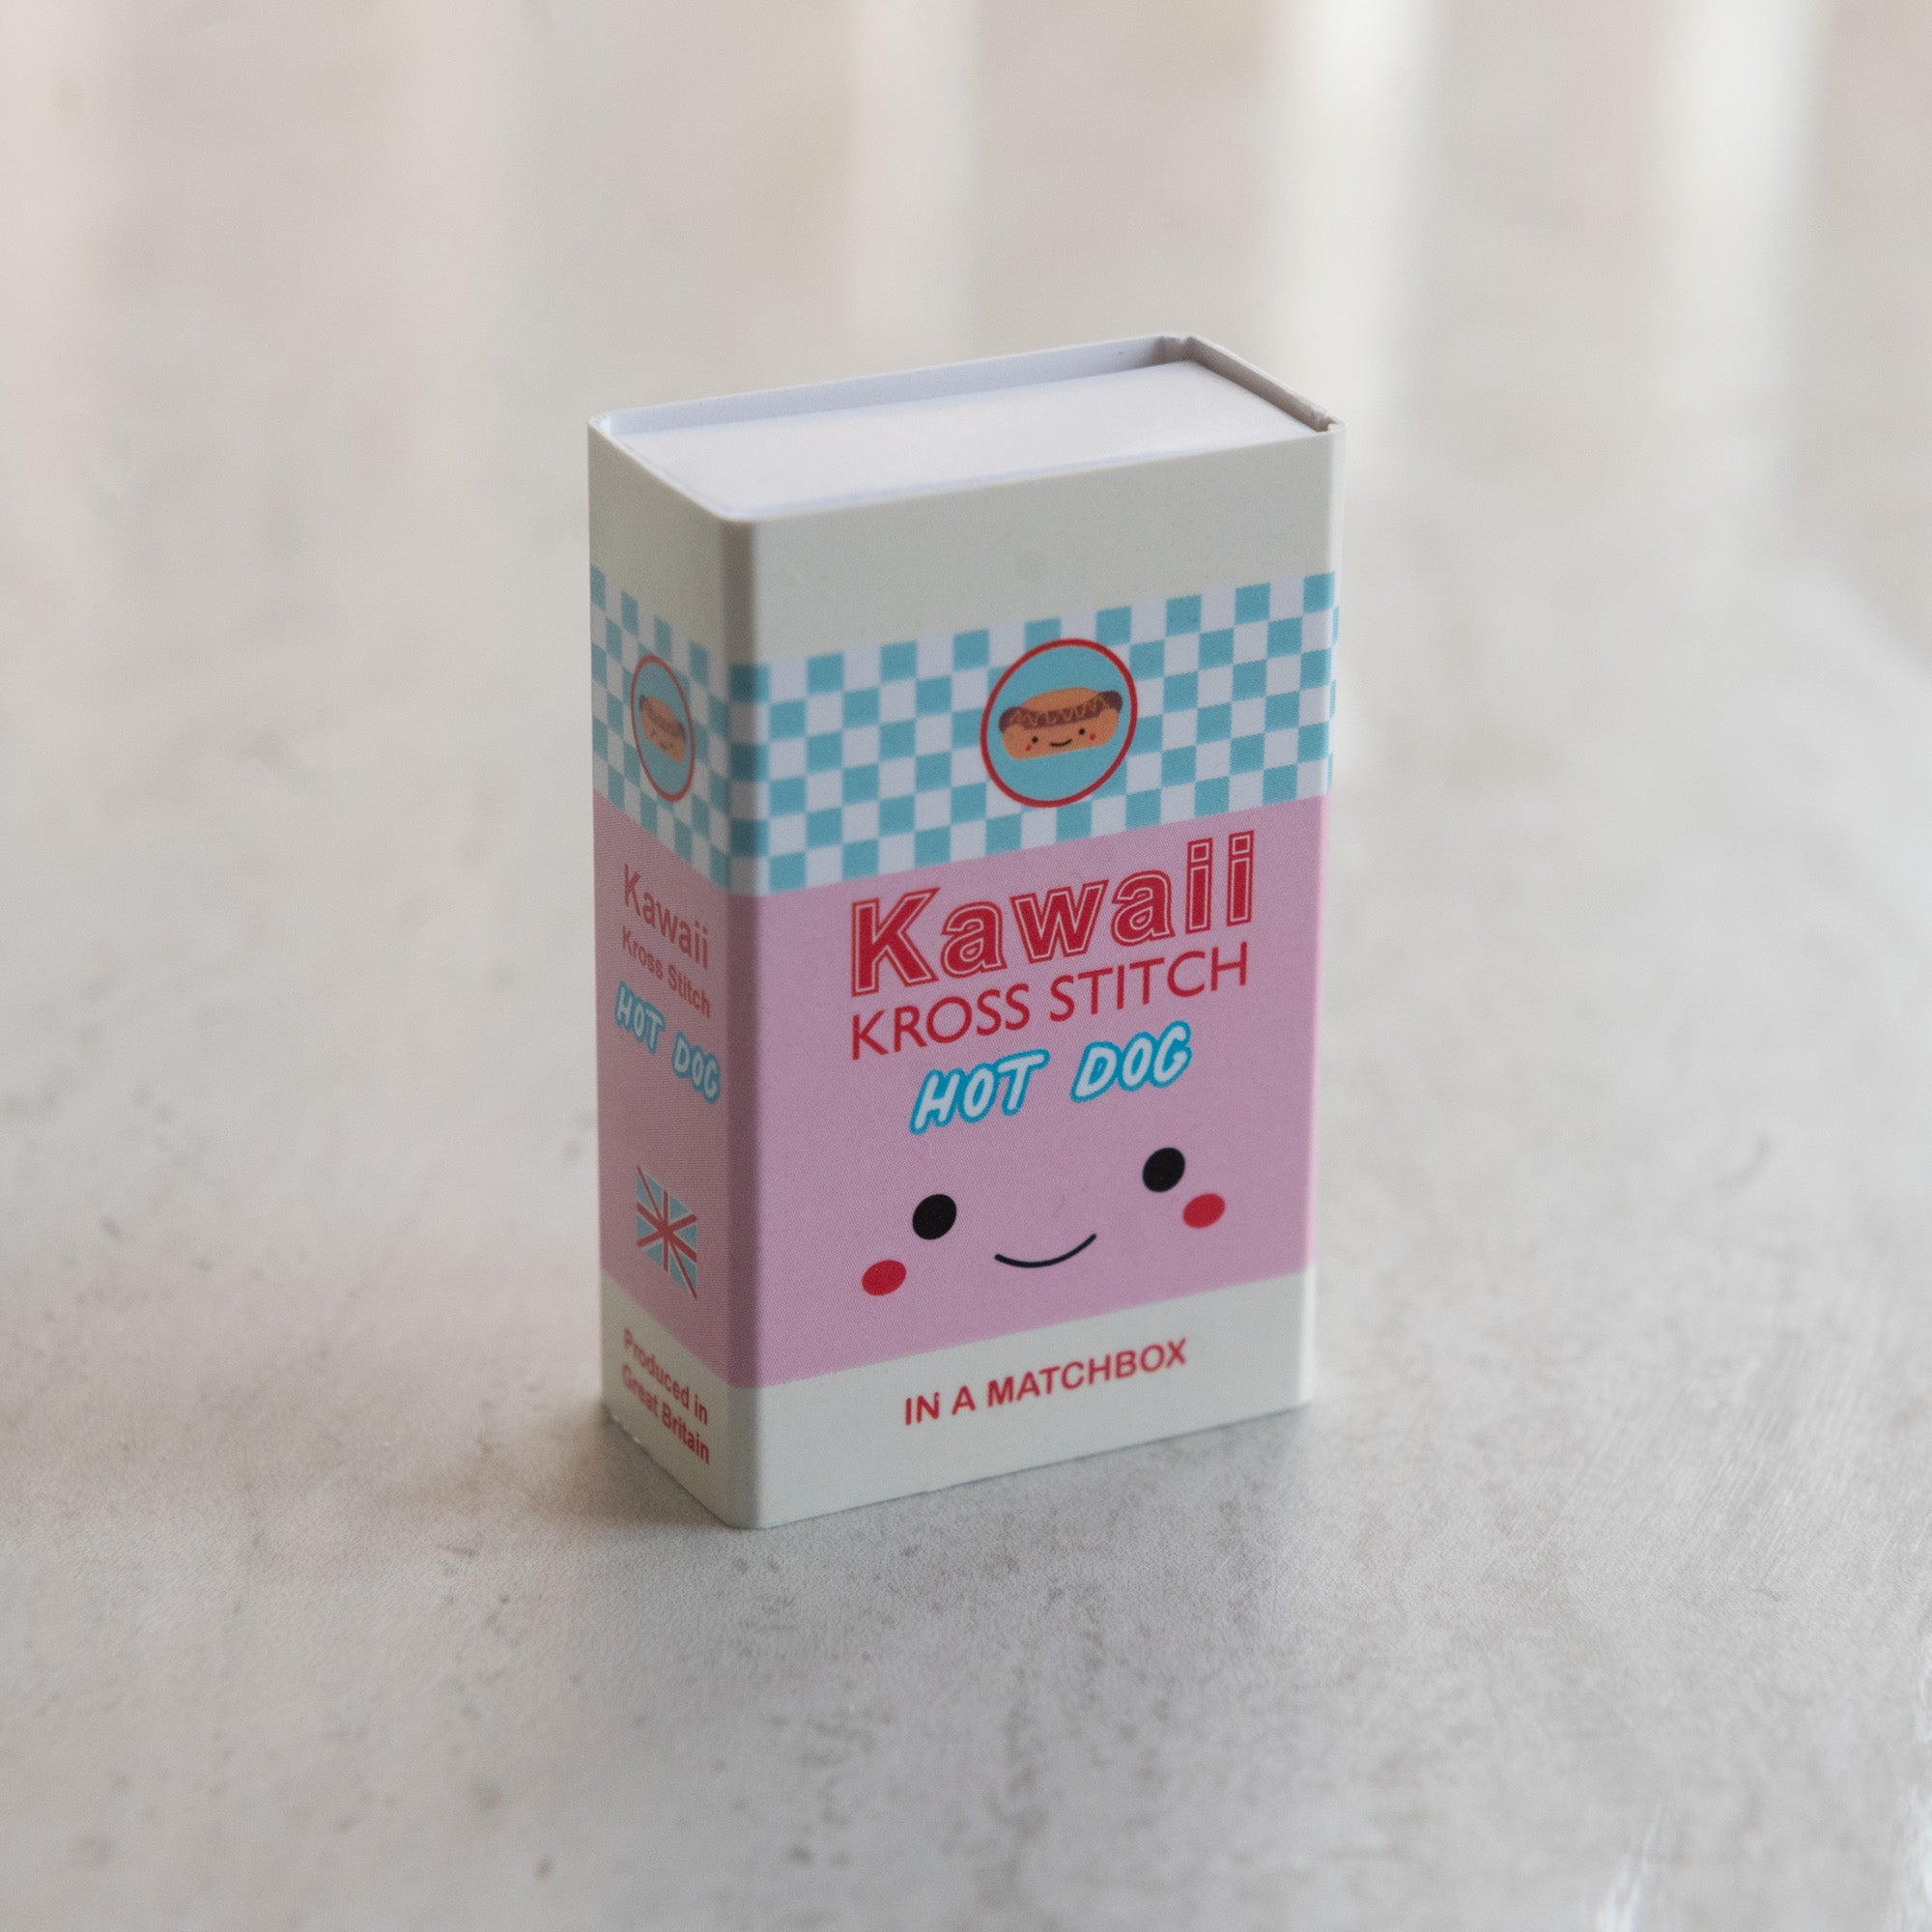 Mini Cross Stitch Kit With Kawaii Hot Dog In A Matchbox